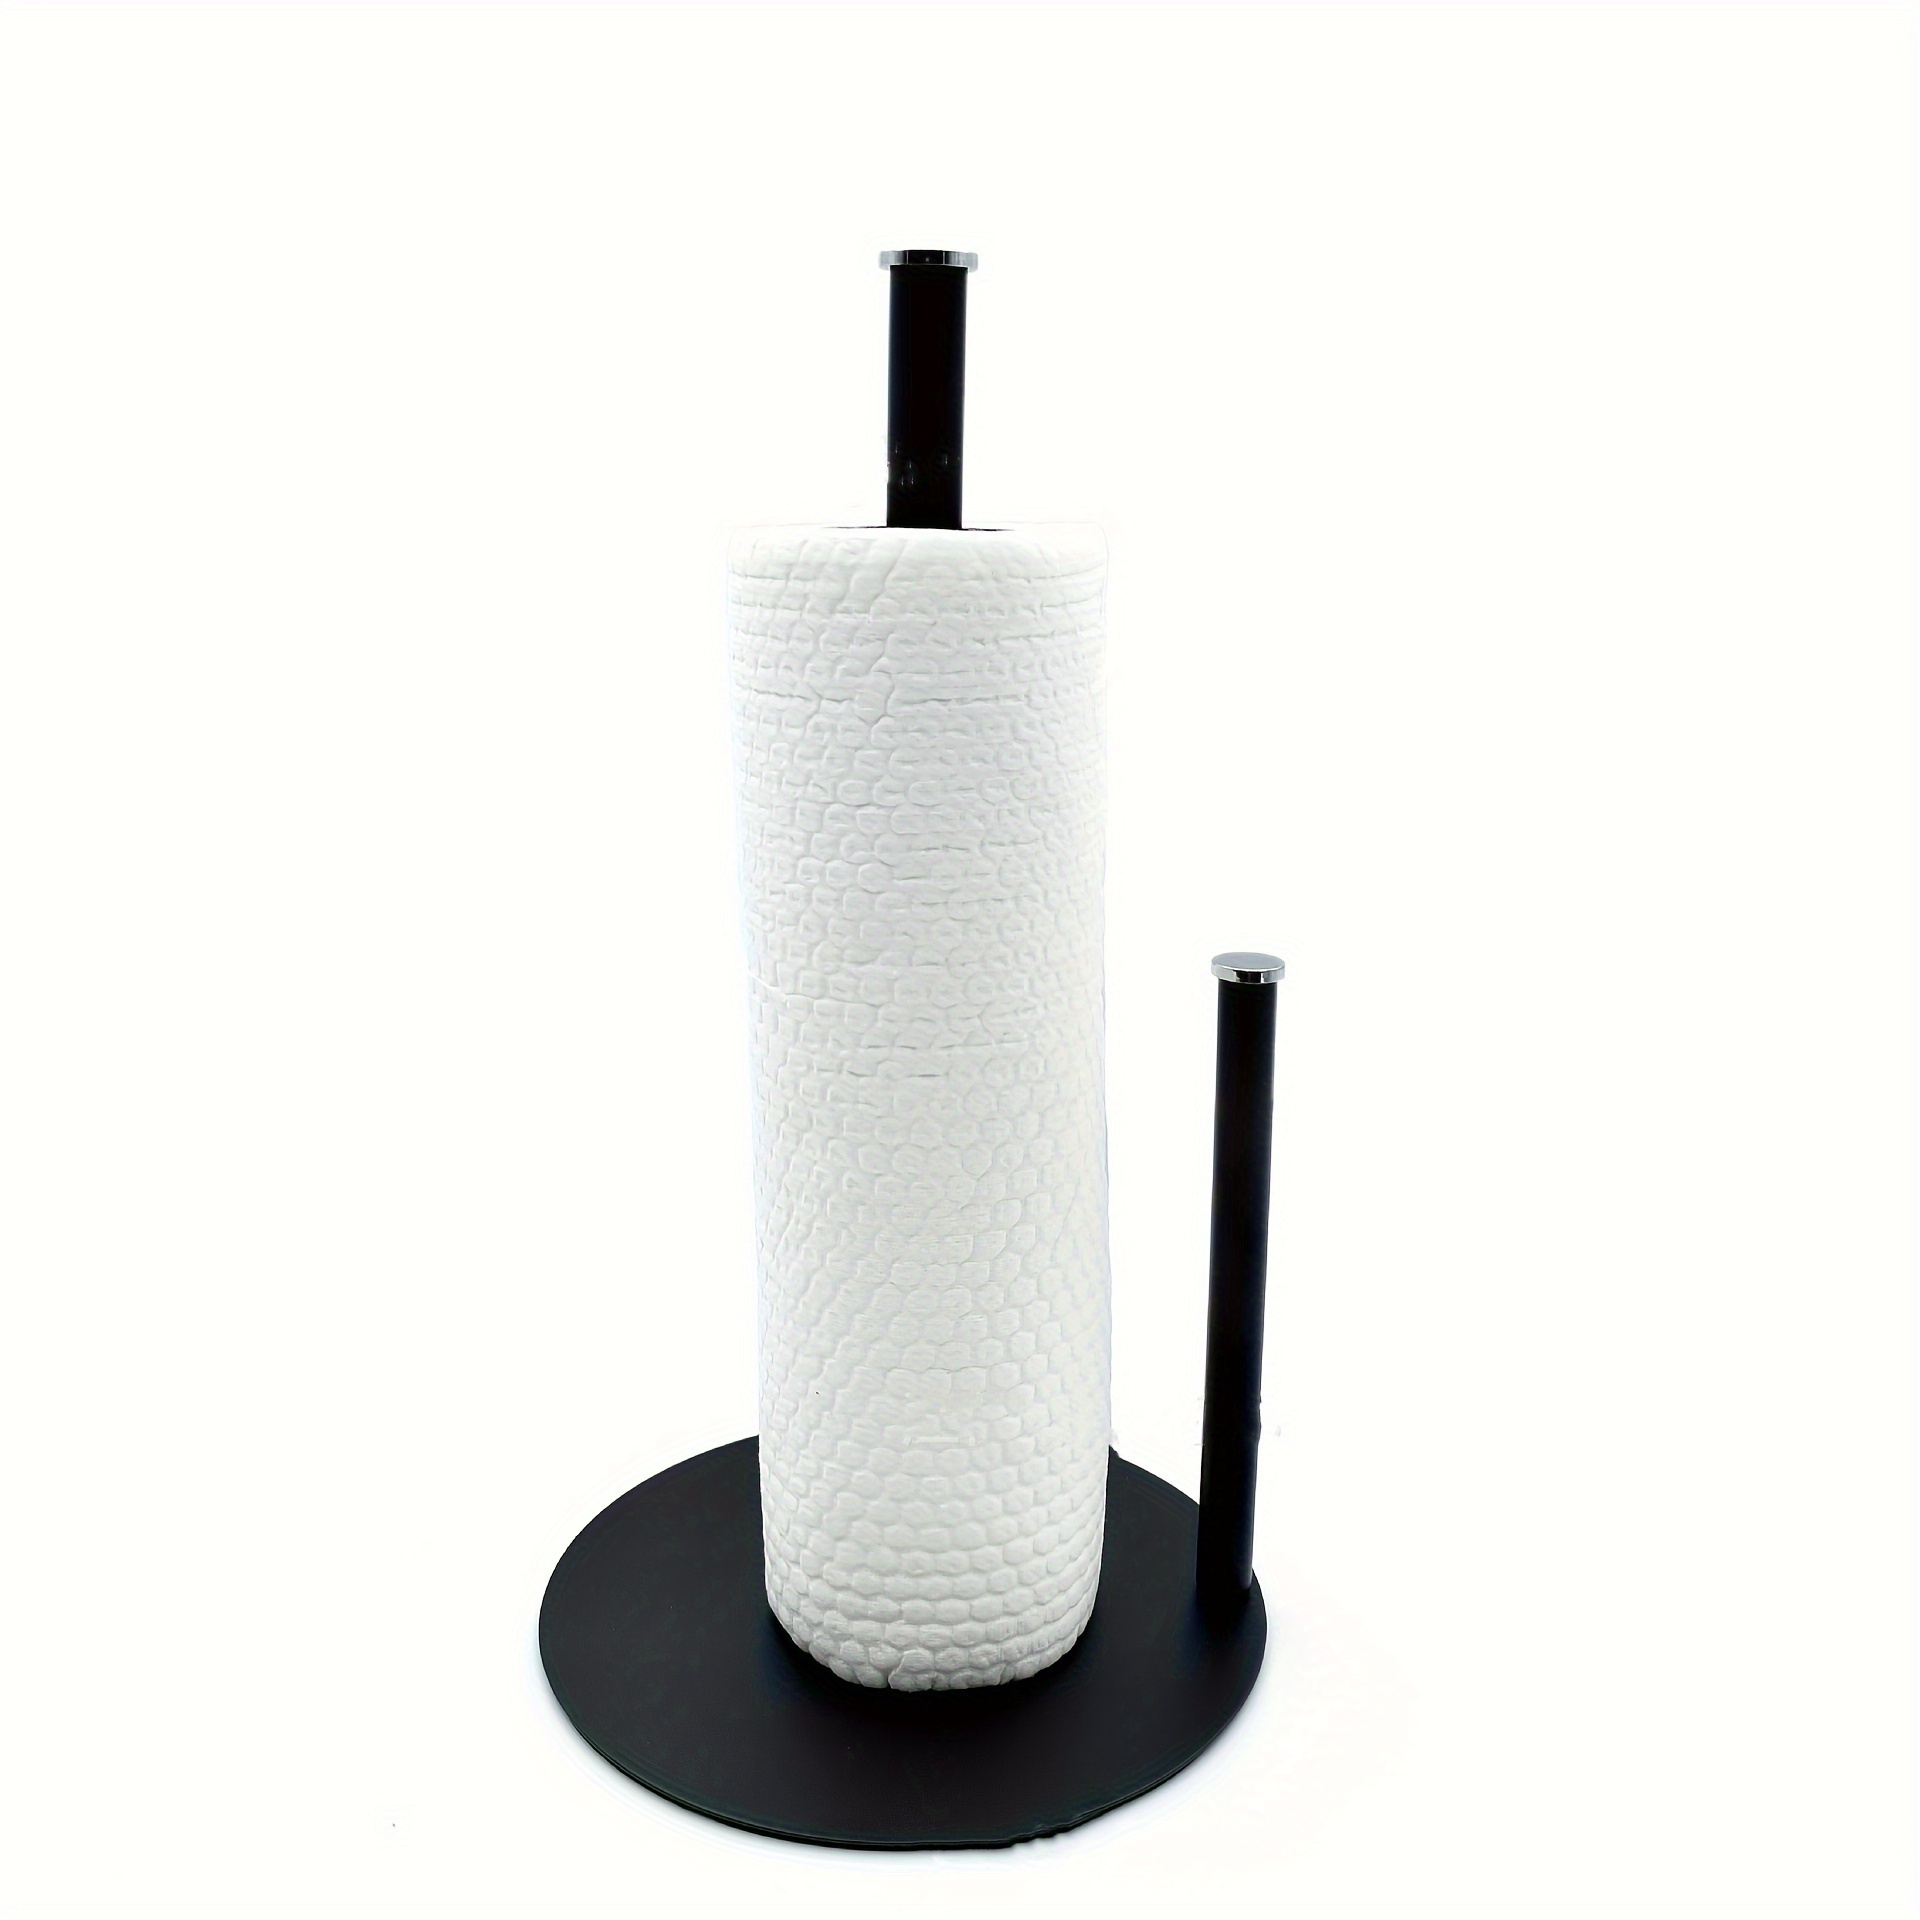 Tabletop/Countertop (Vertical) Paper Towel Holder - household